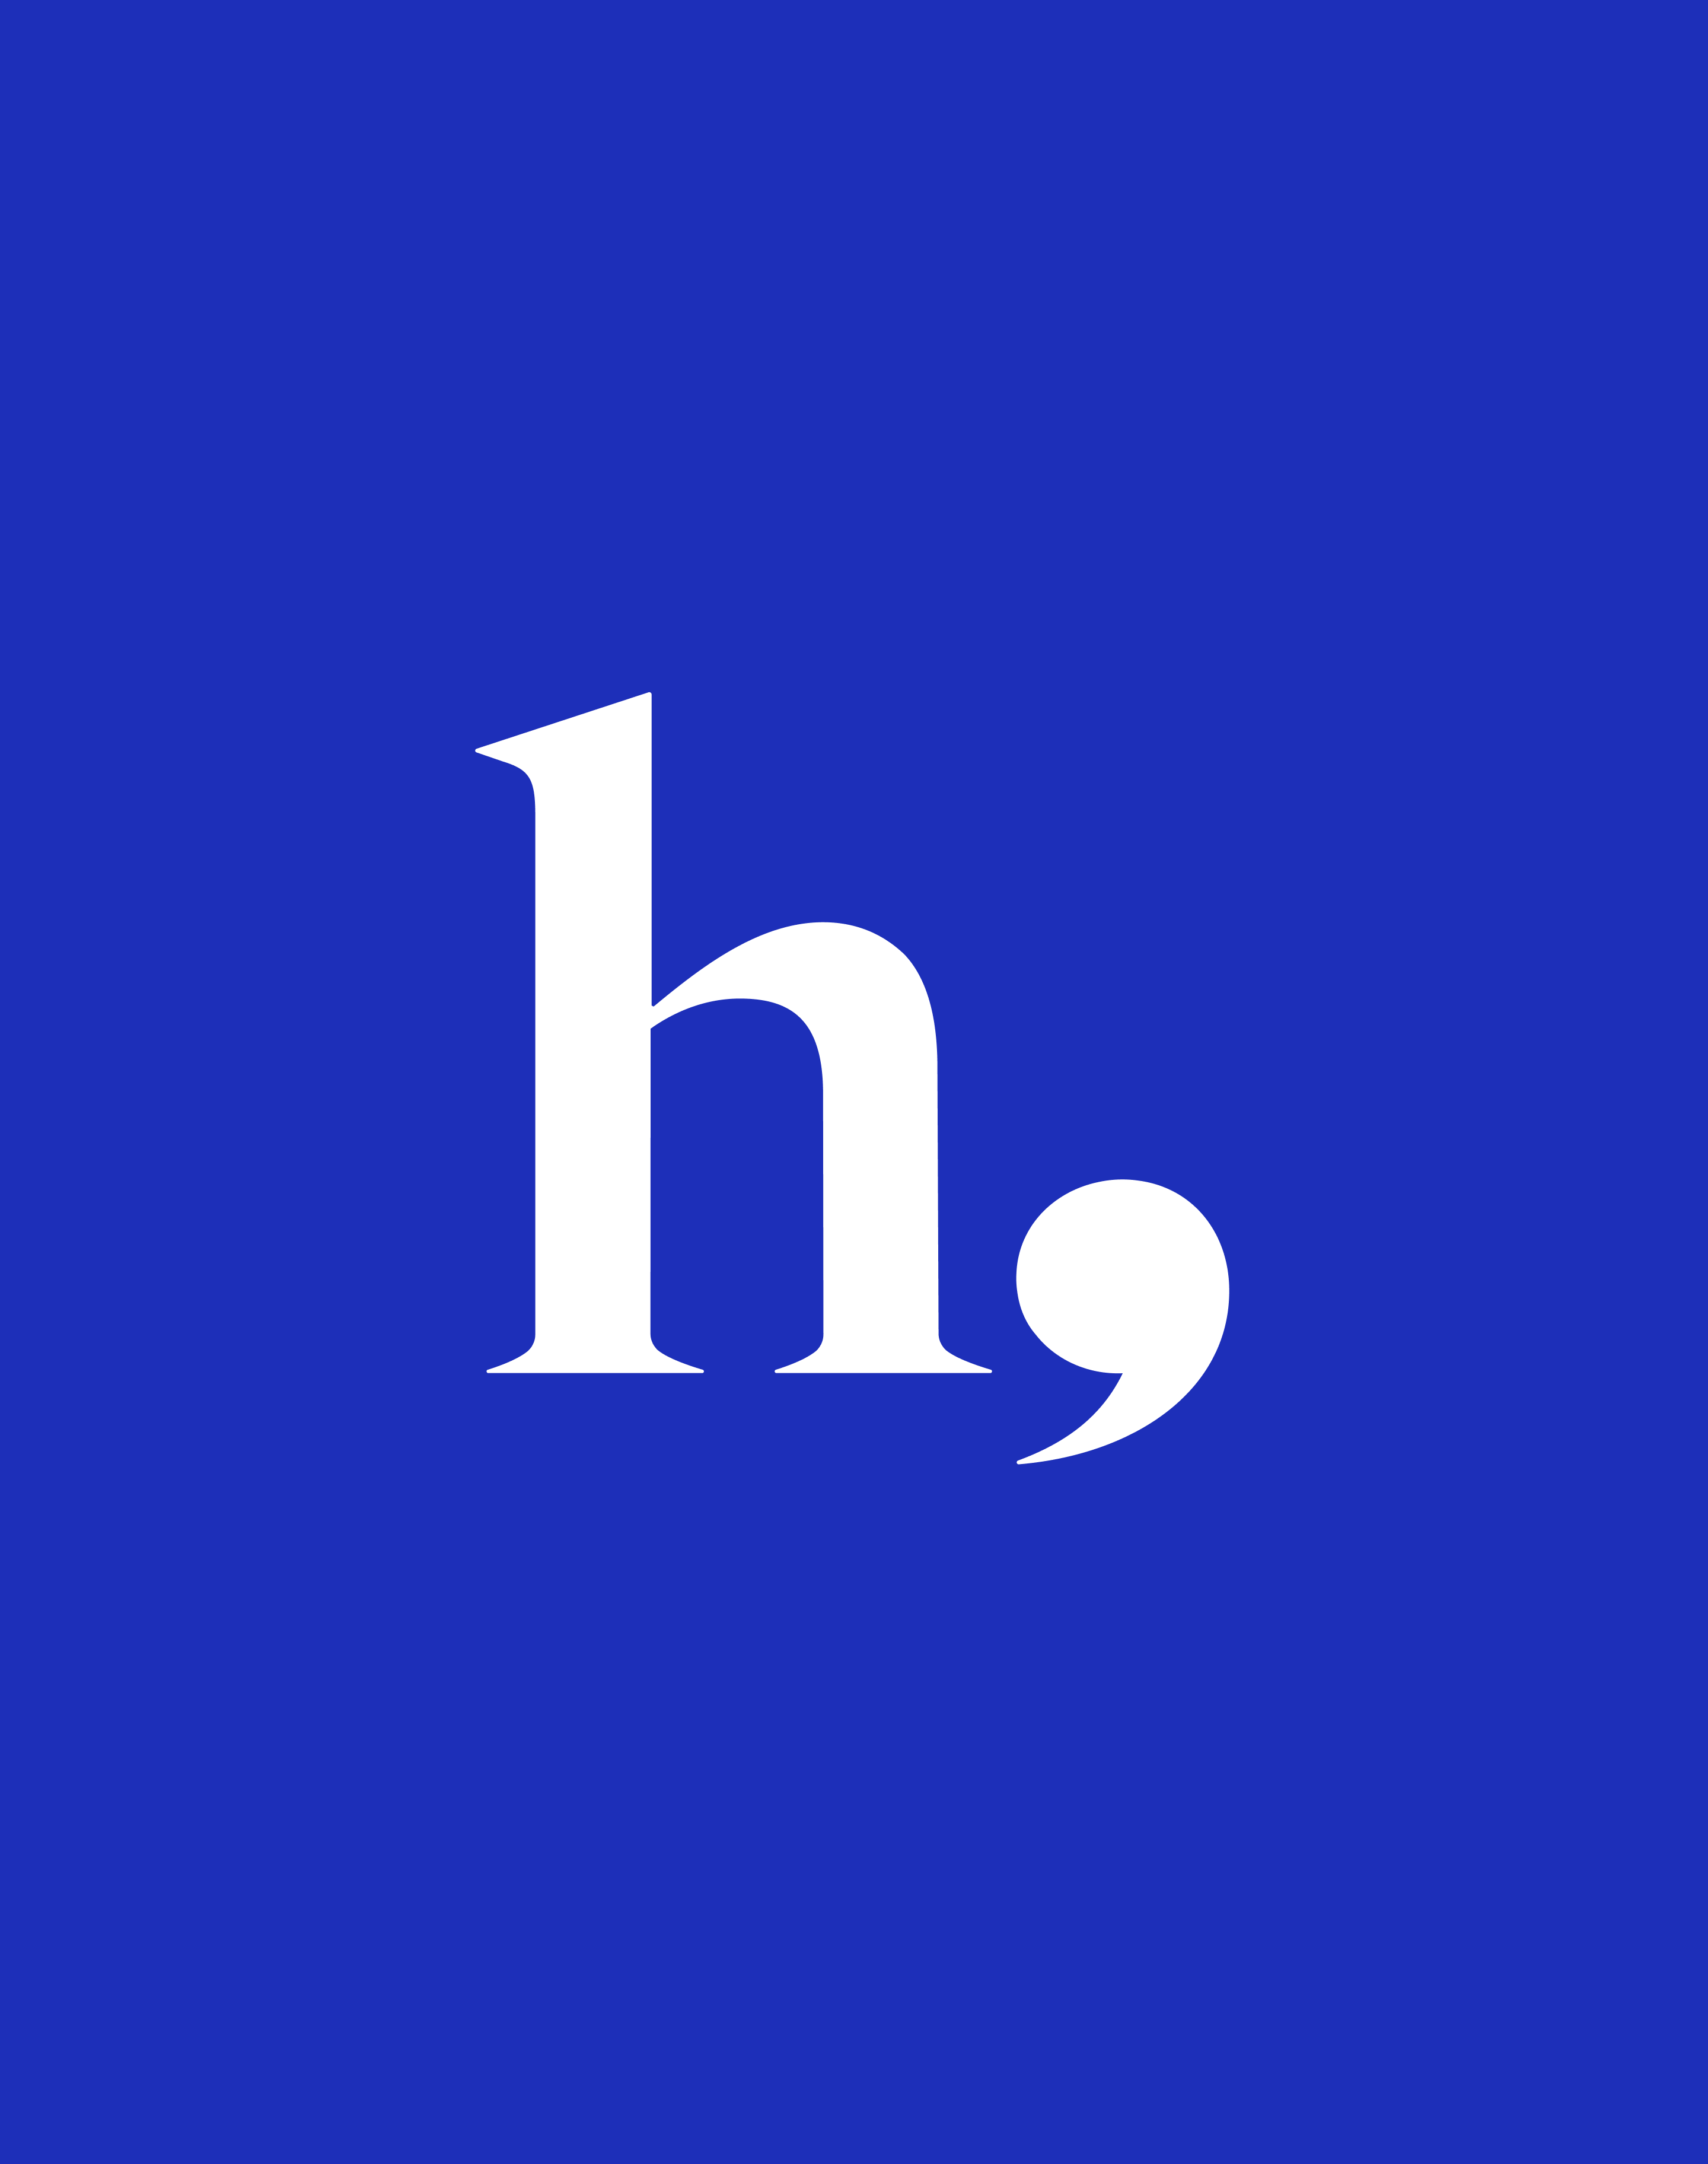 hnine's logo on blue background